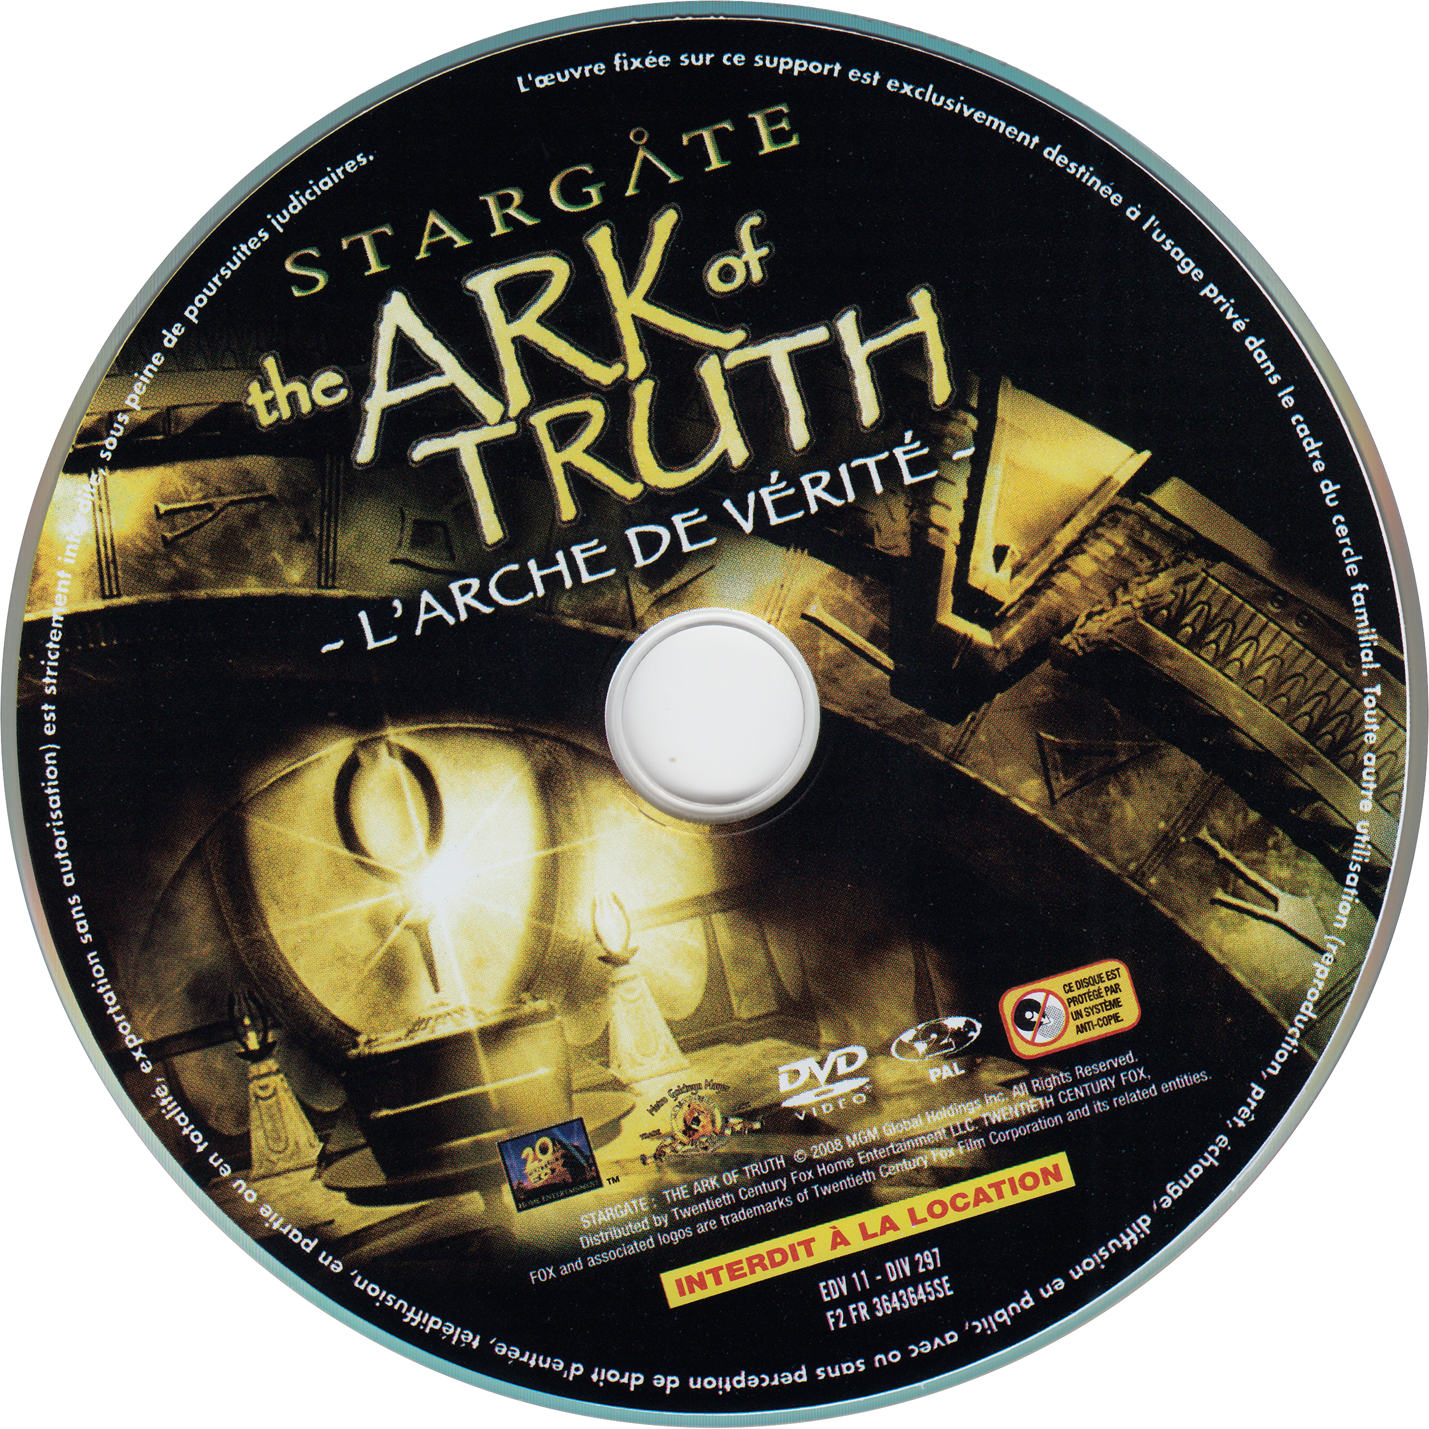 Stargate The ark of truth - L